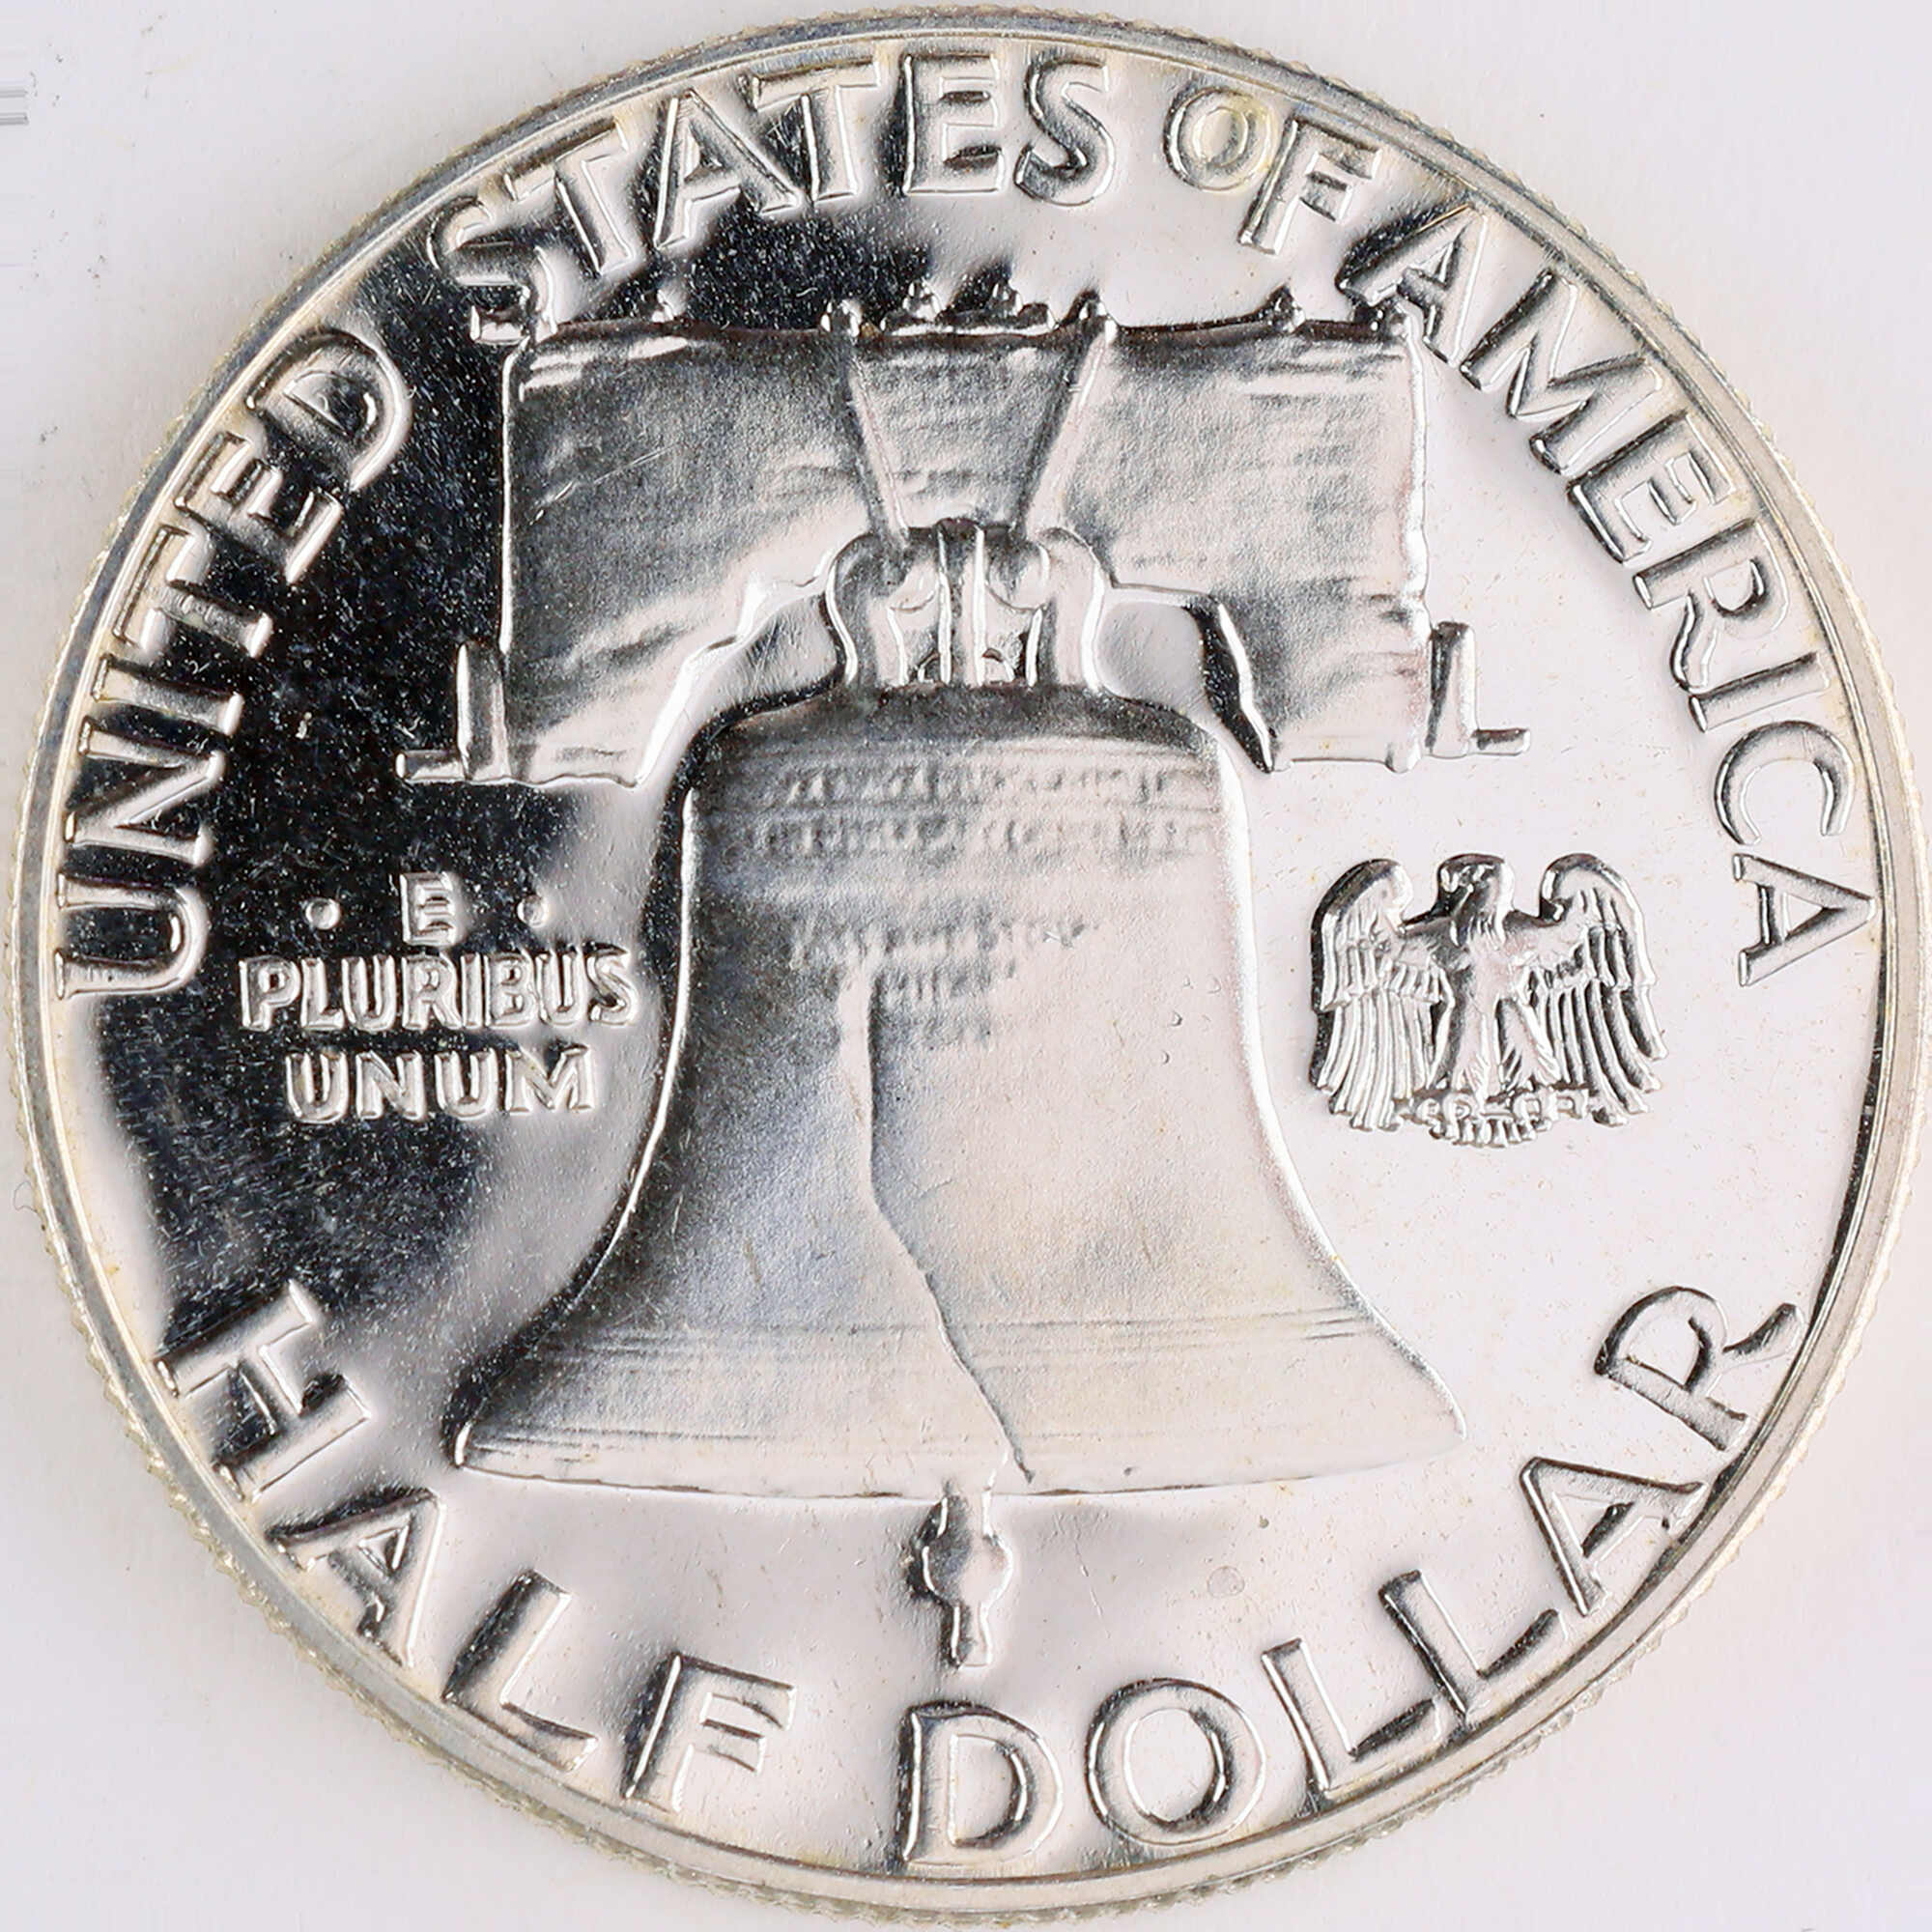 1961 Franklin Half Dollar Silver 50c Proof Coin SKU:I12094